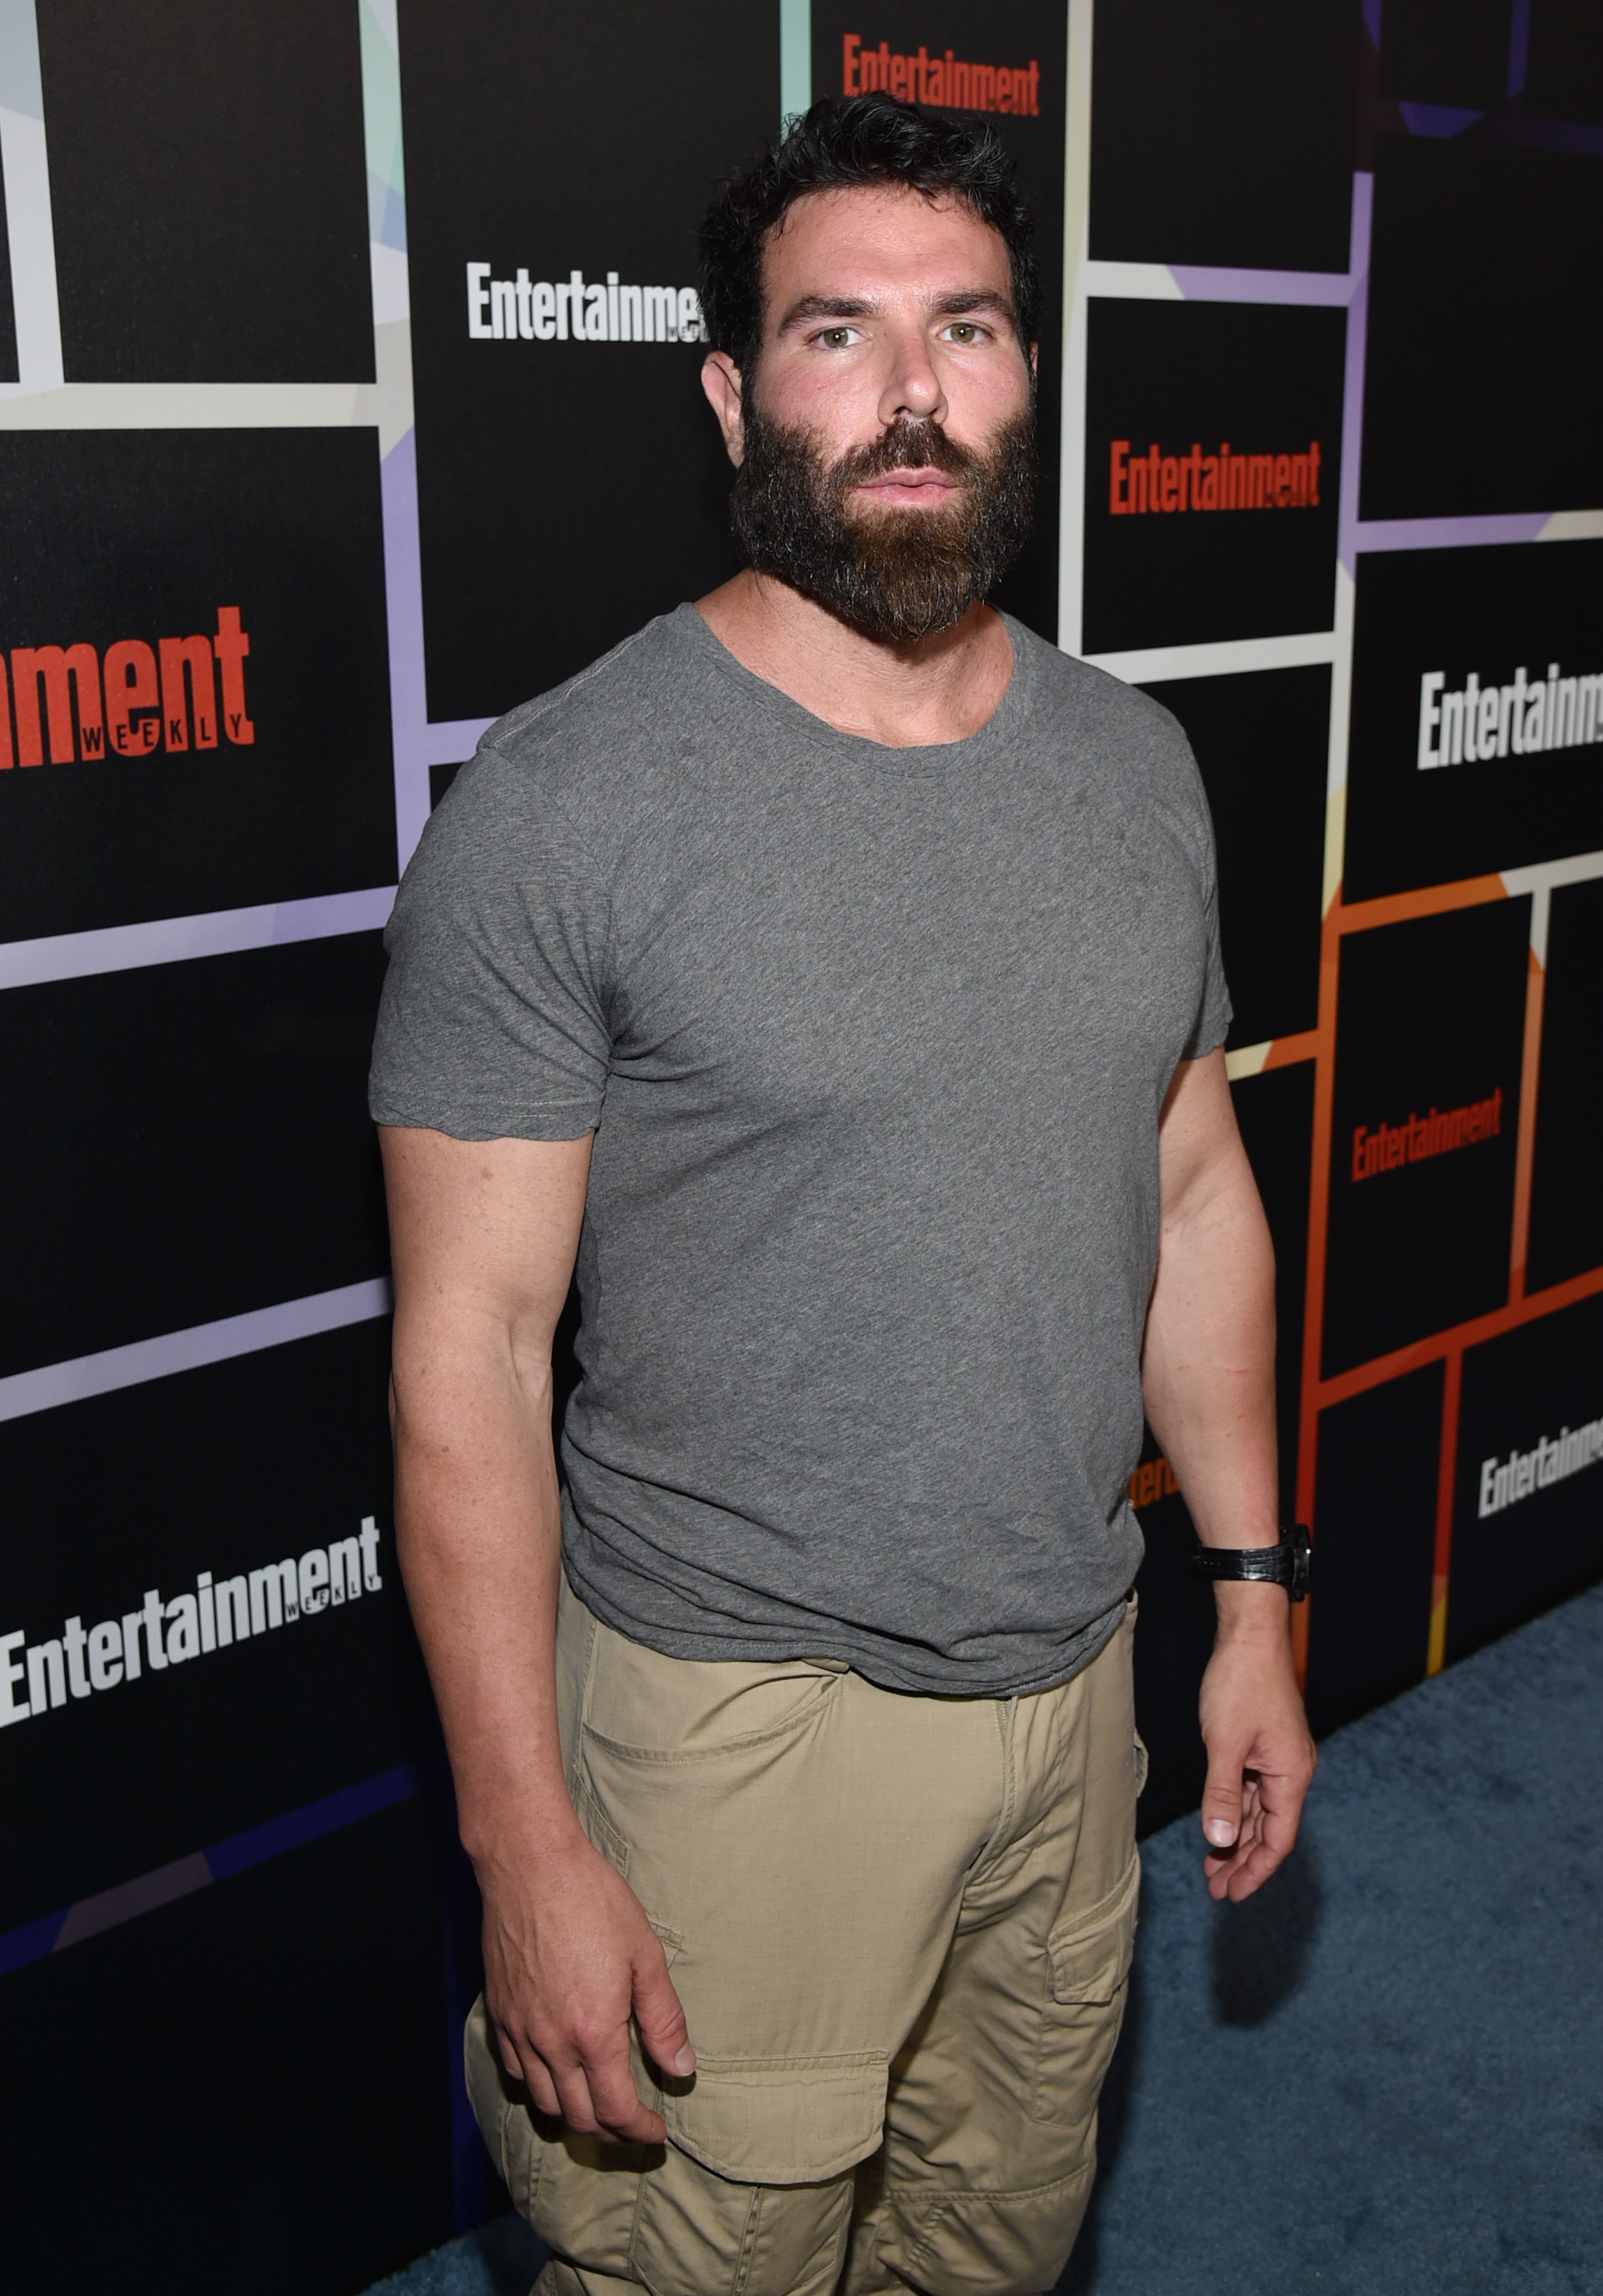 Dan Bilzerian arrives at Entertainment Weekly's Annual Comic-Con Closing Night Celebration in San Diego on July 26, 2014. (John Shearer—AP)